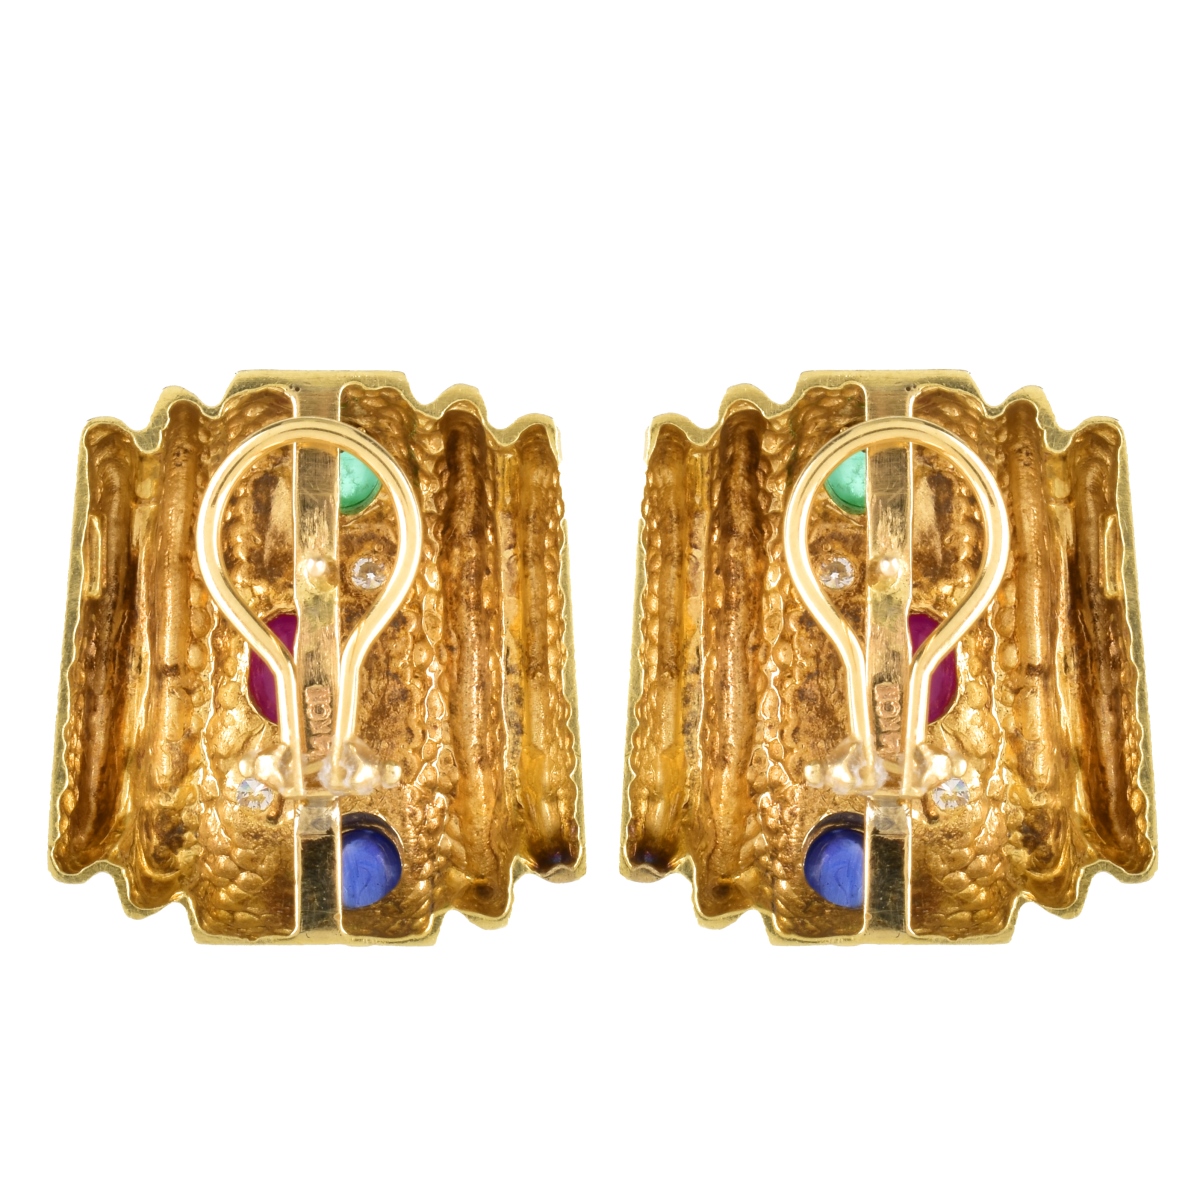 Bulgari style 18K Gold and Gemstone Earrings